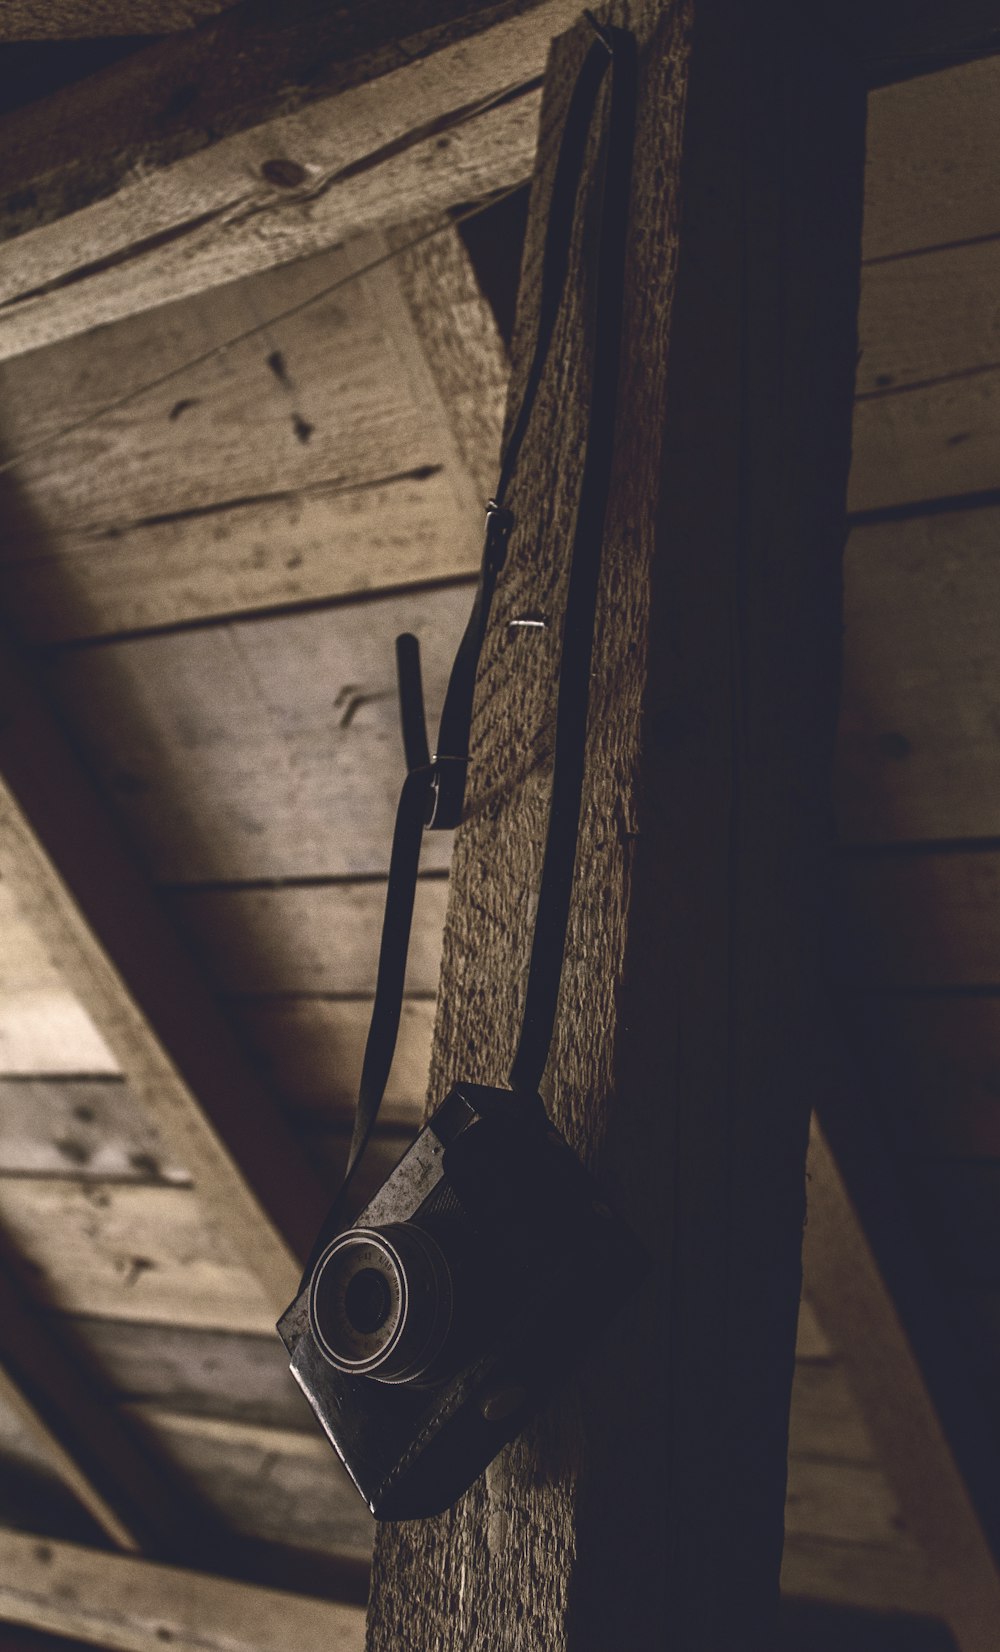 Fotocamera nera point-and-shoot appesa a una barra di legno marrone